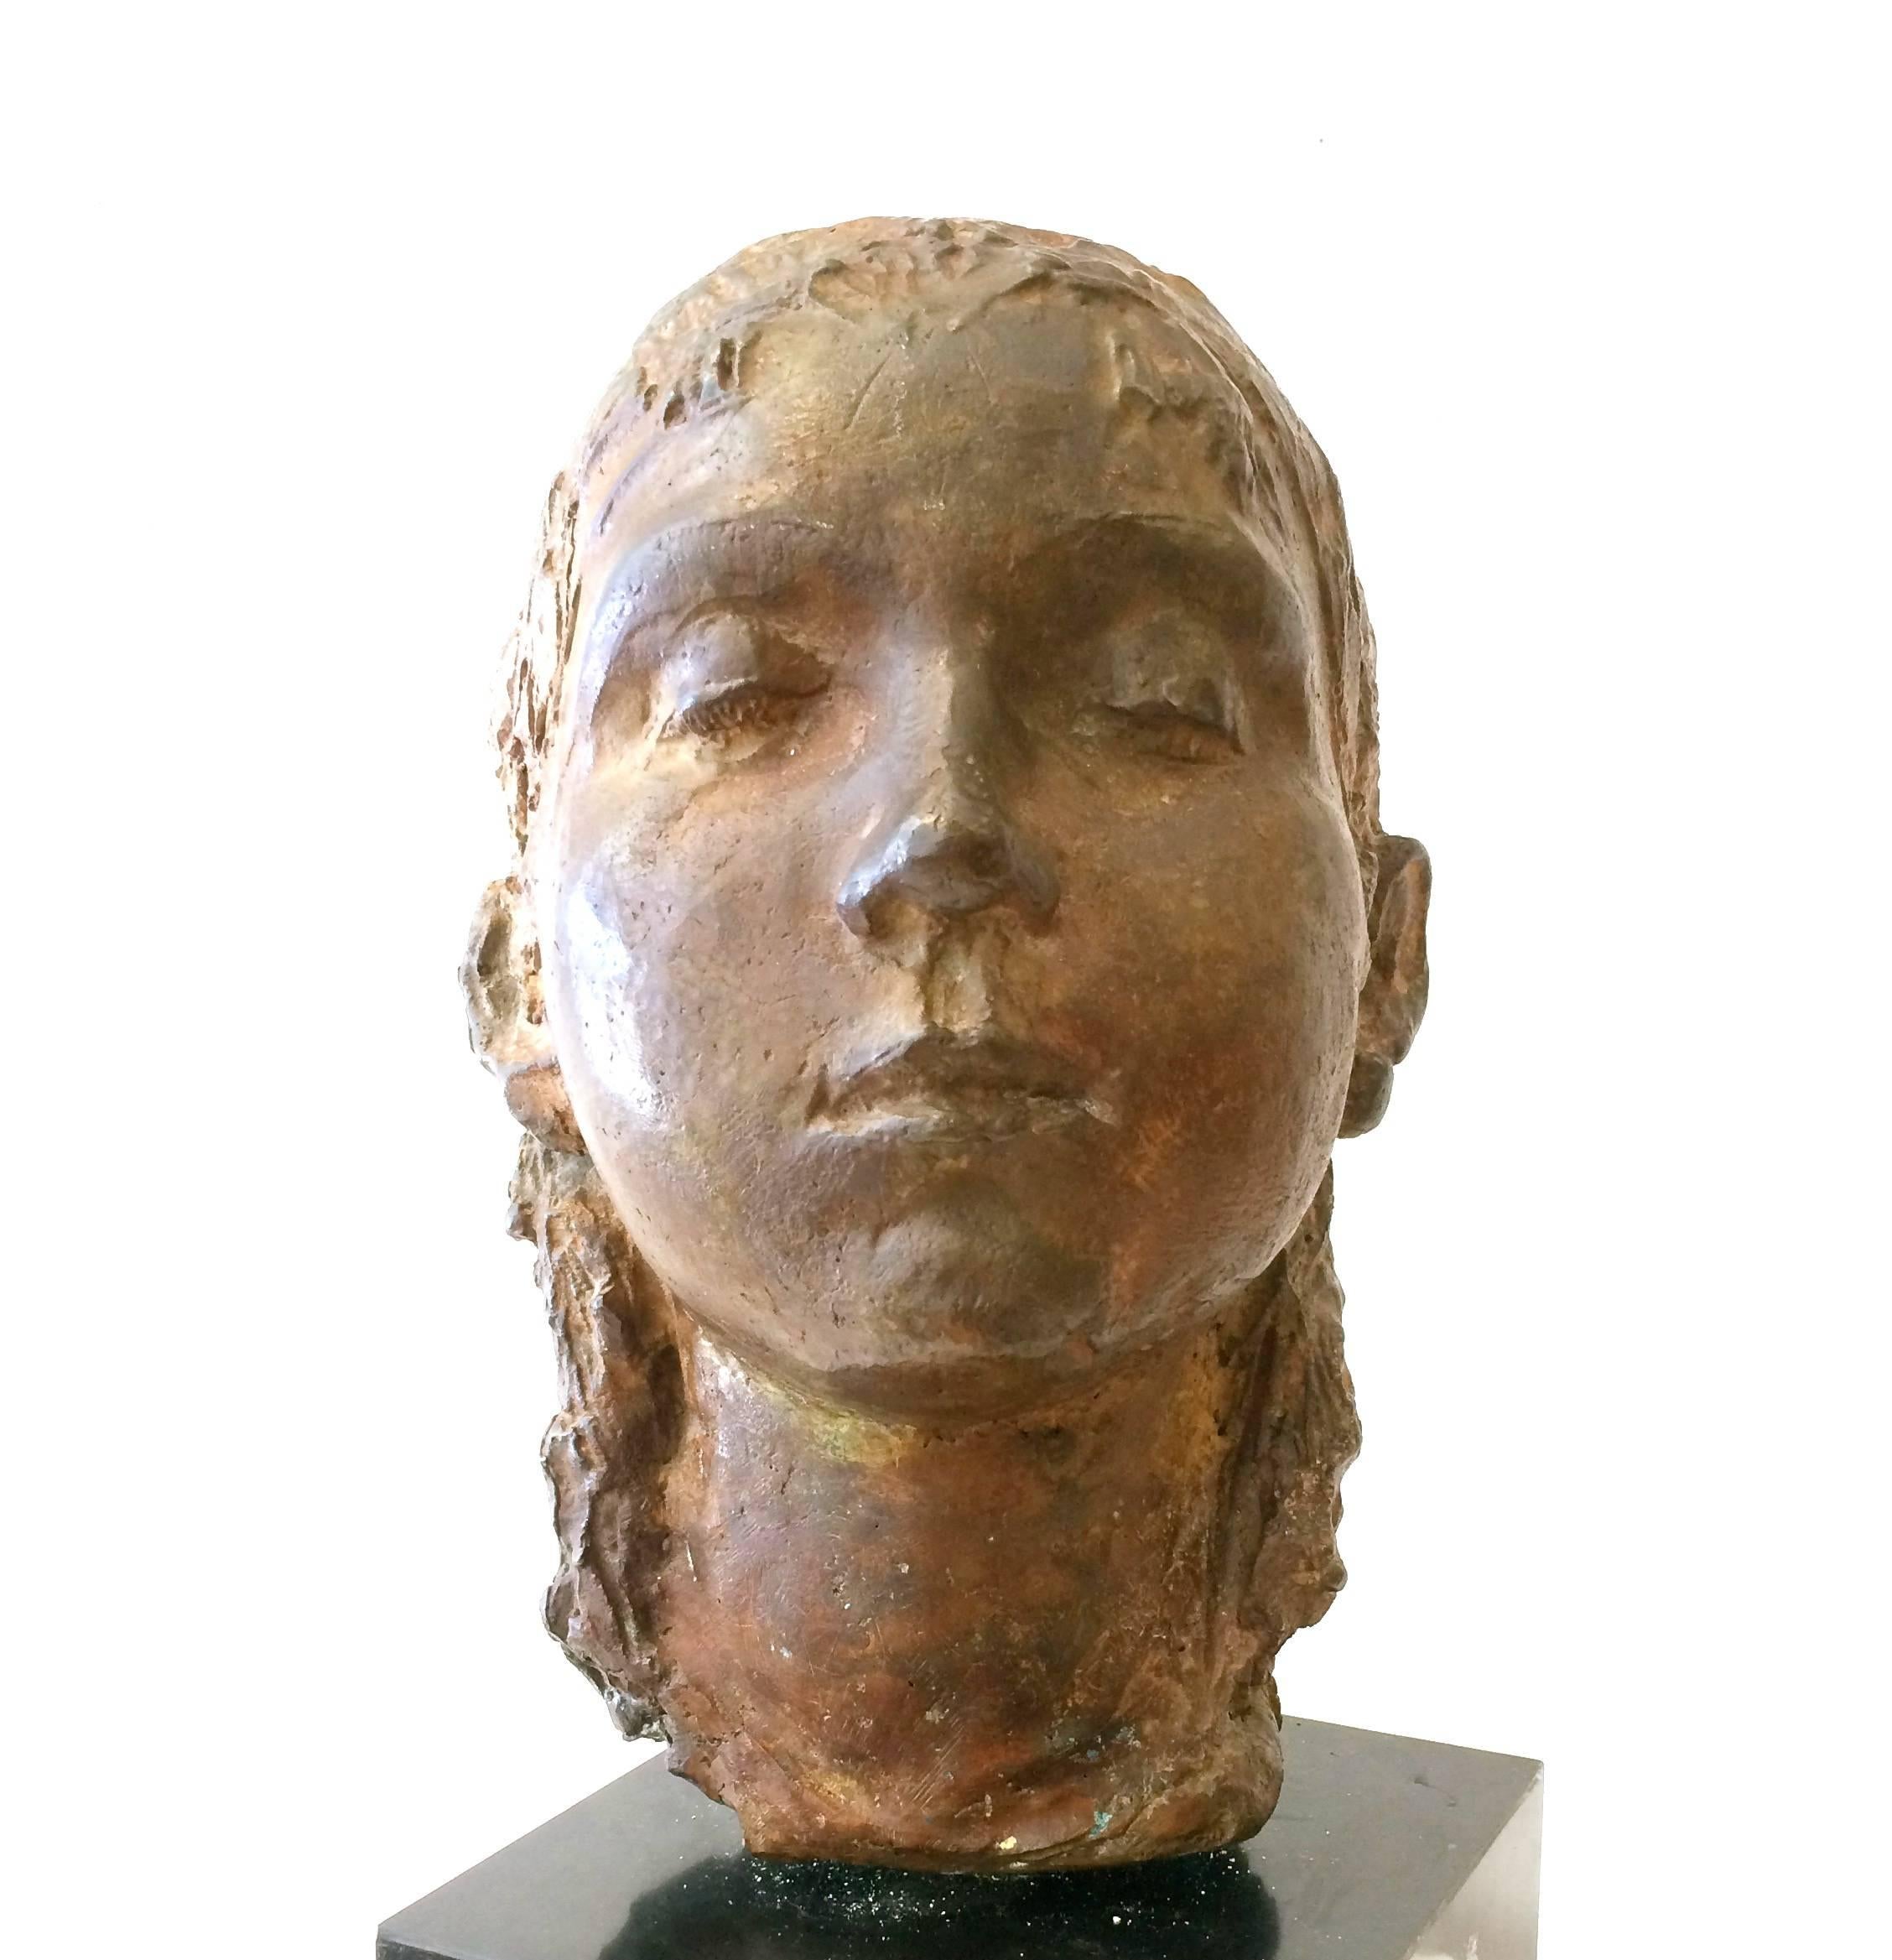 Young Girl Bronze Sculpture - Gold Figurative Sculpture by Dorotea Shwarcz Greenboum